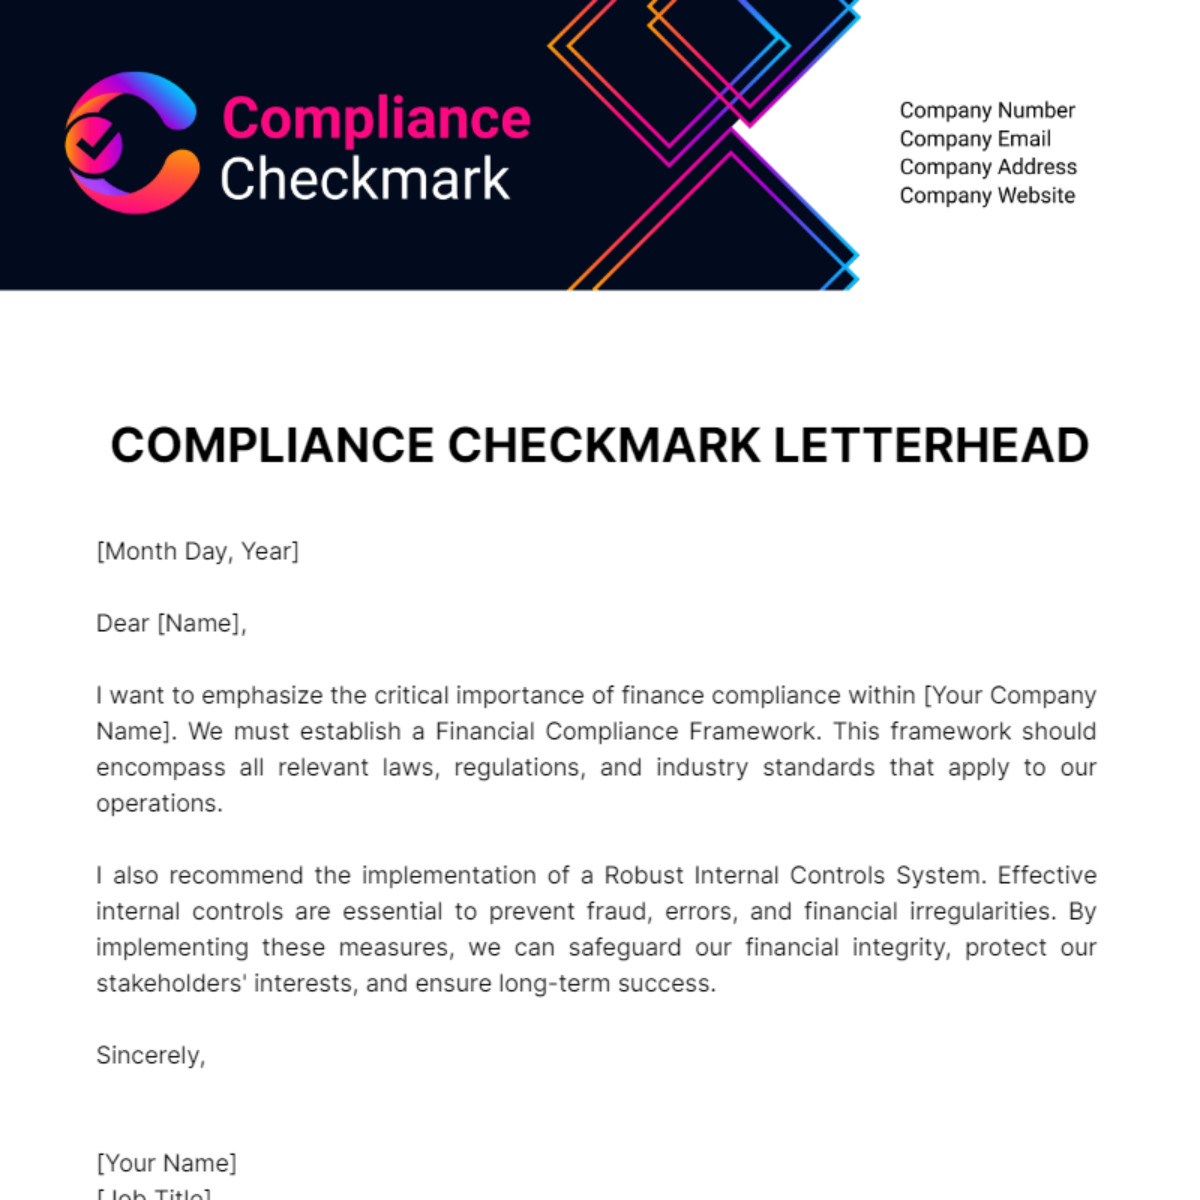 Compliance Checkmark Letterhead Template